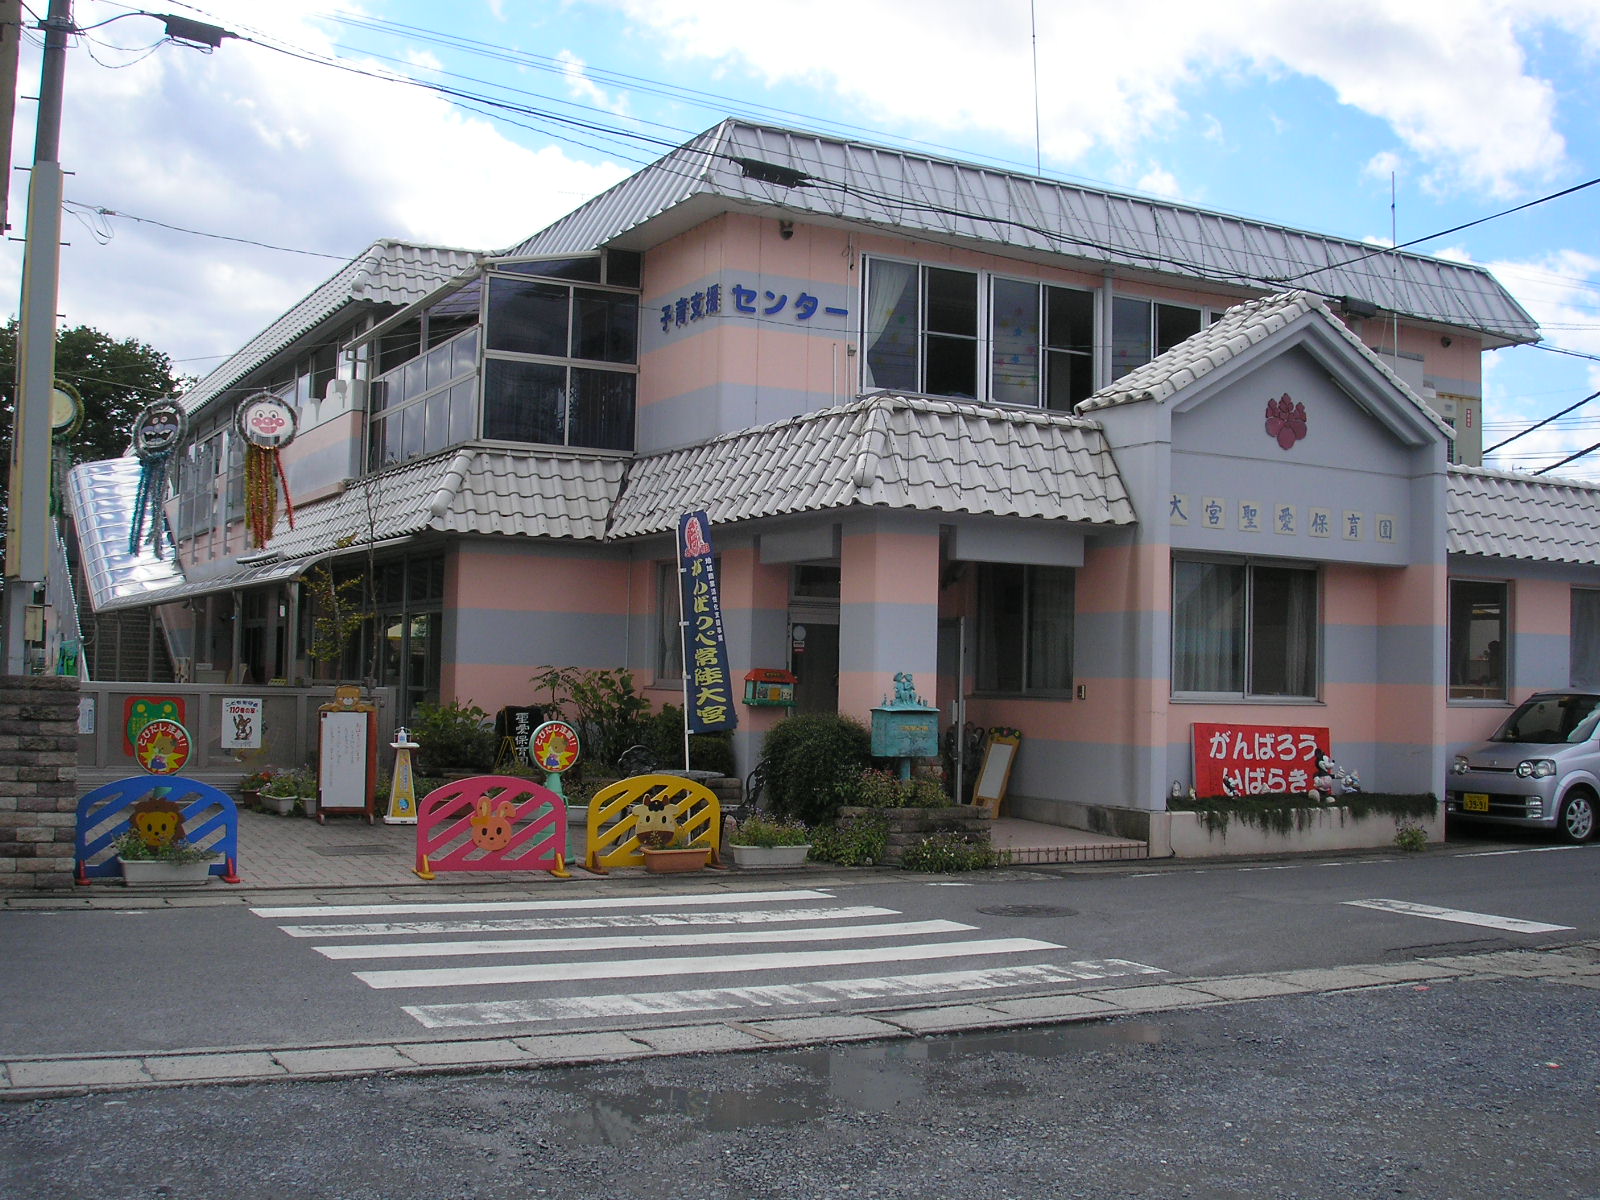 kindergarten ・ Nursery. Omiya HijiriAi nursery school (kindergarten ・ 973m to the nursery)